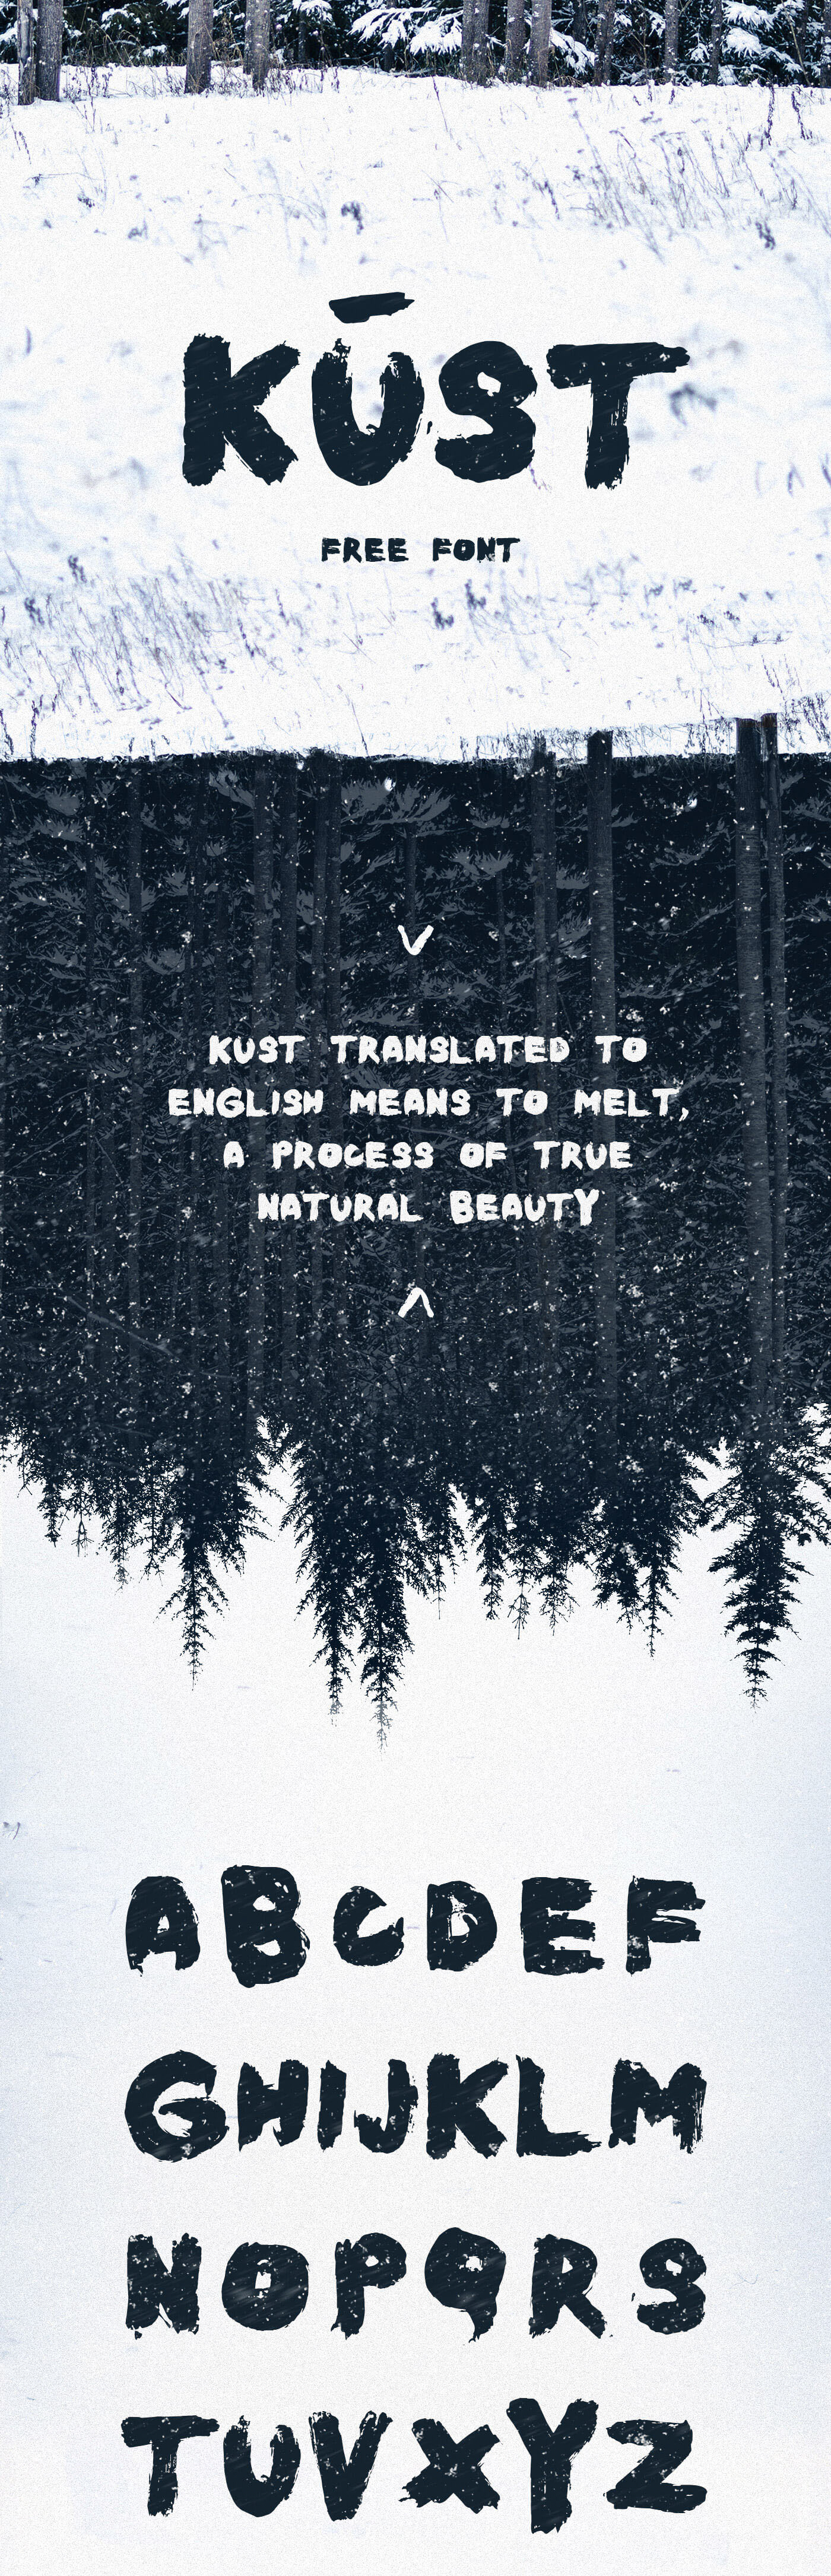 free font Free font brush handwritten Brush font freebie Latvia lettering winter forest pics instagram dark